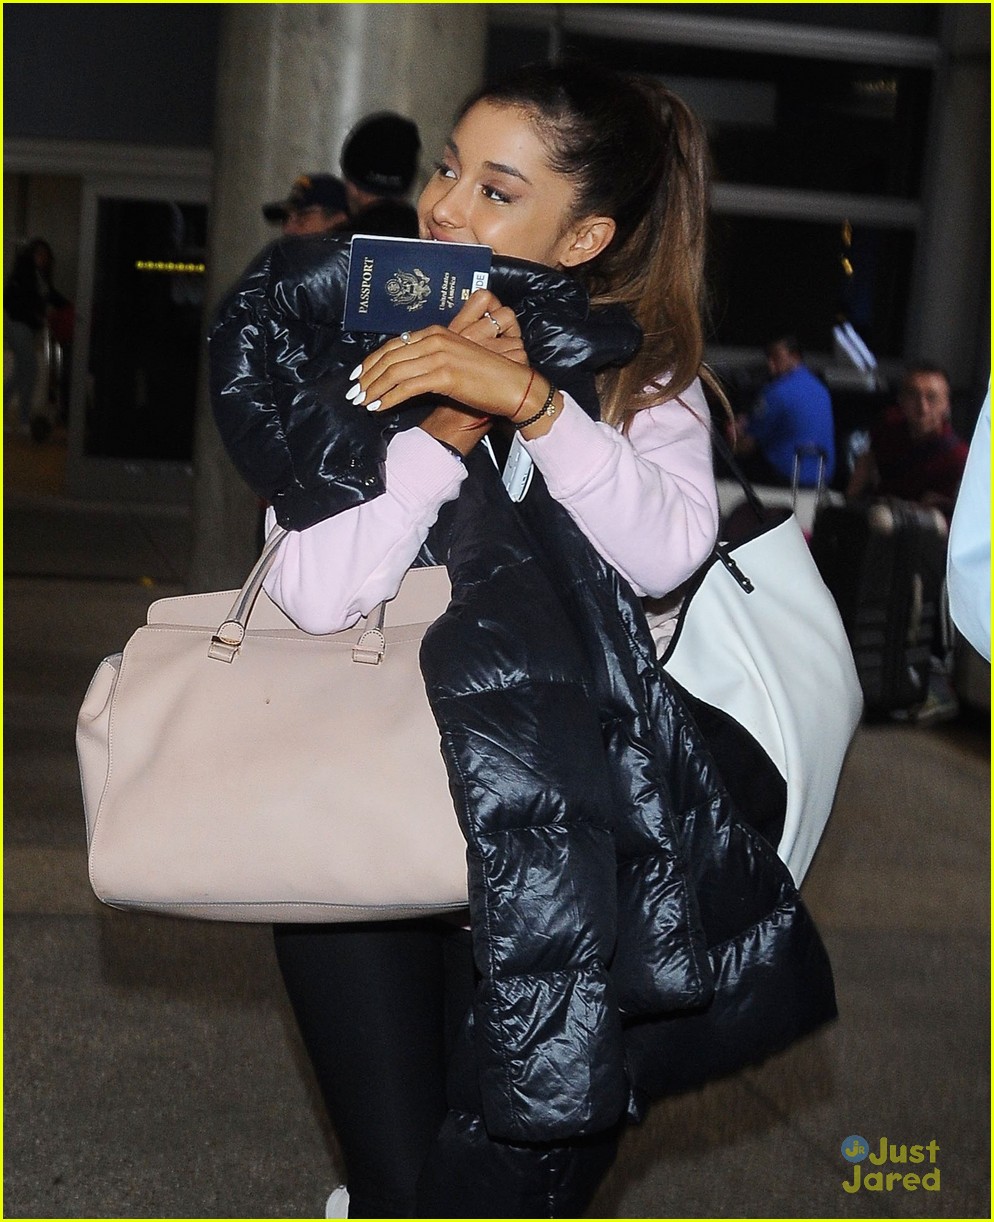 Reductress » Ariana Grande Is Now a Handbag!